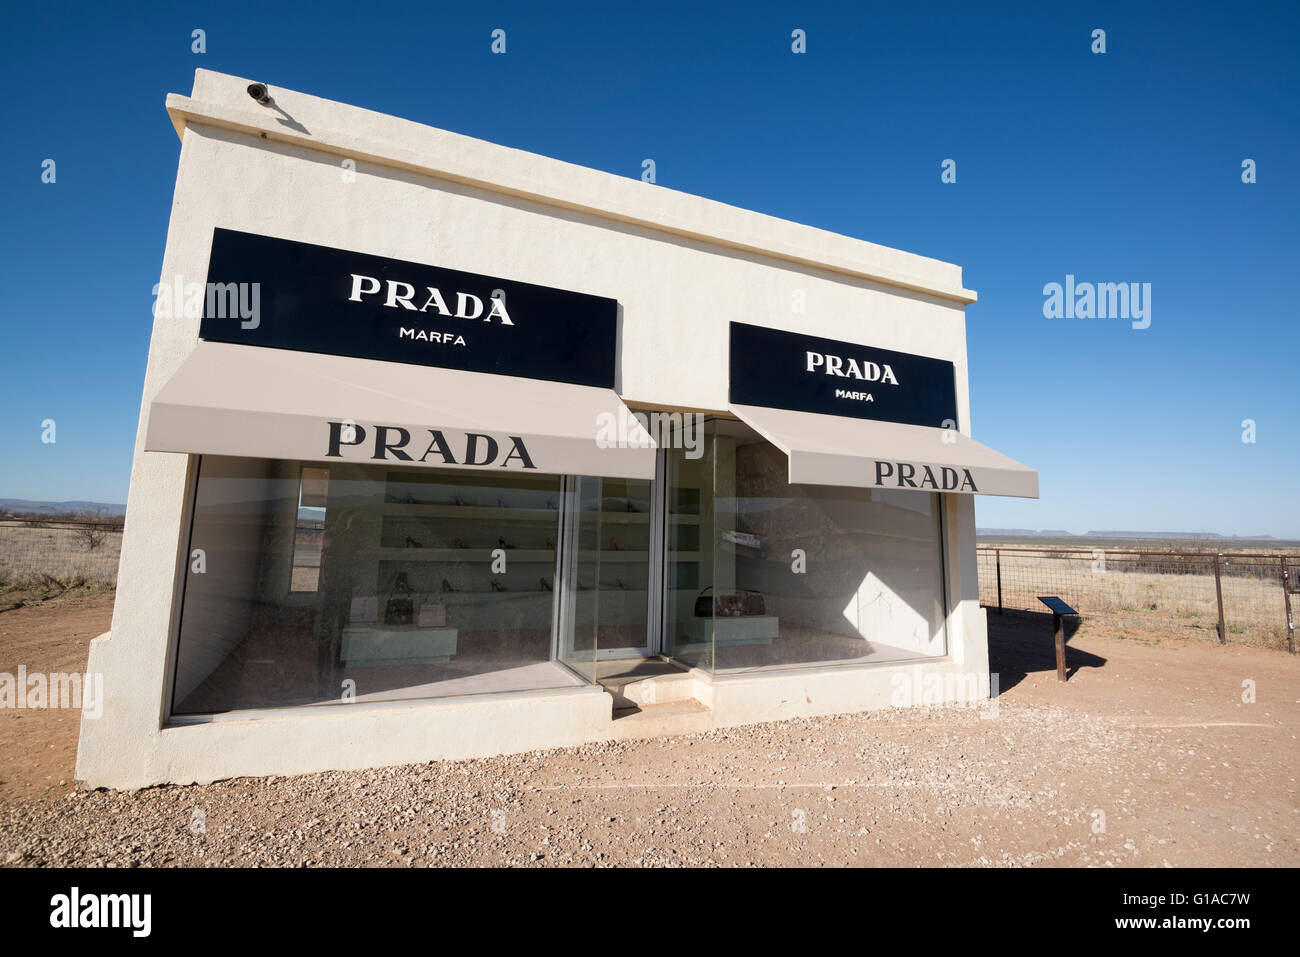 Prada Marfa, an art installation near Valentine, Texas Stock Photo - Alamy